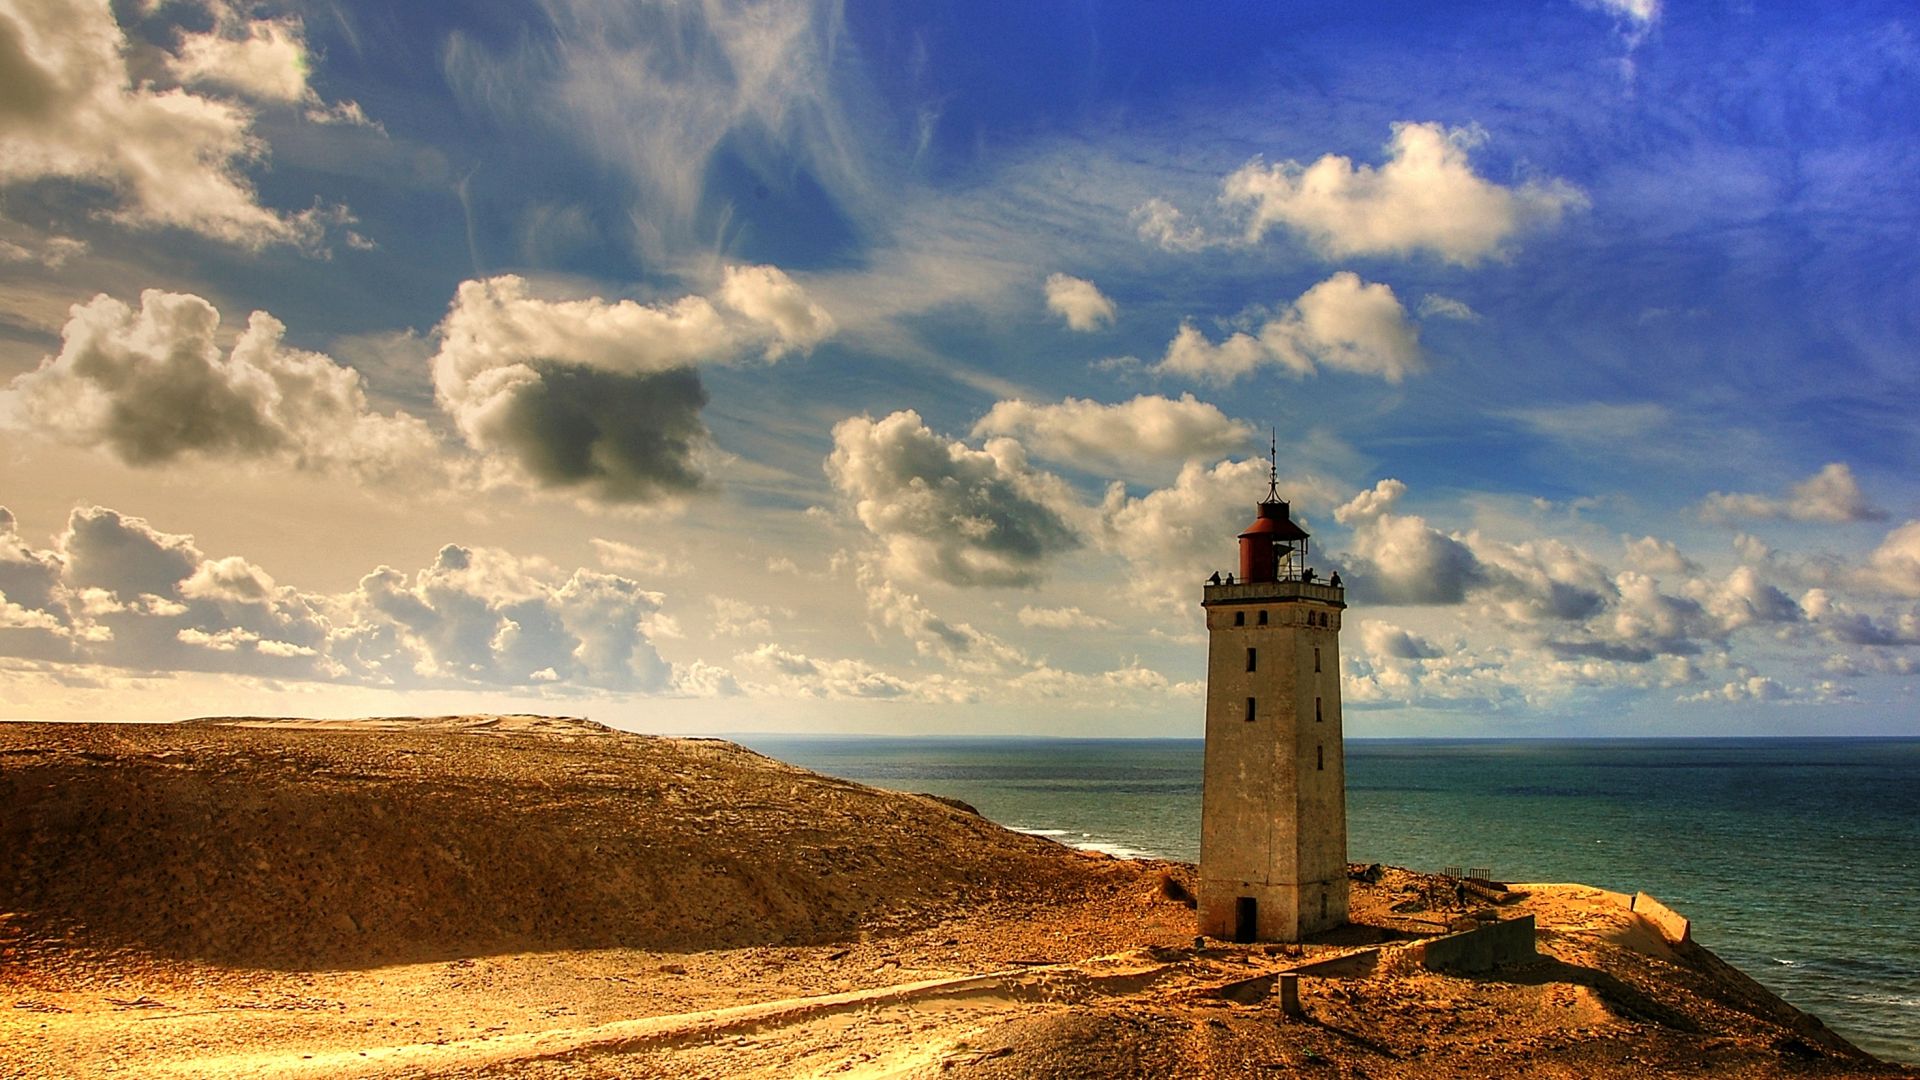 Wallpaper Rubjerg Knude lighthouse, lighthouse, landscape, sea, clouds, denmark